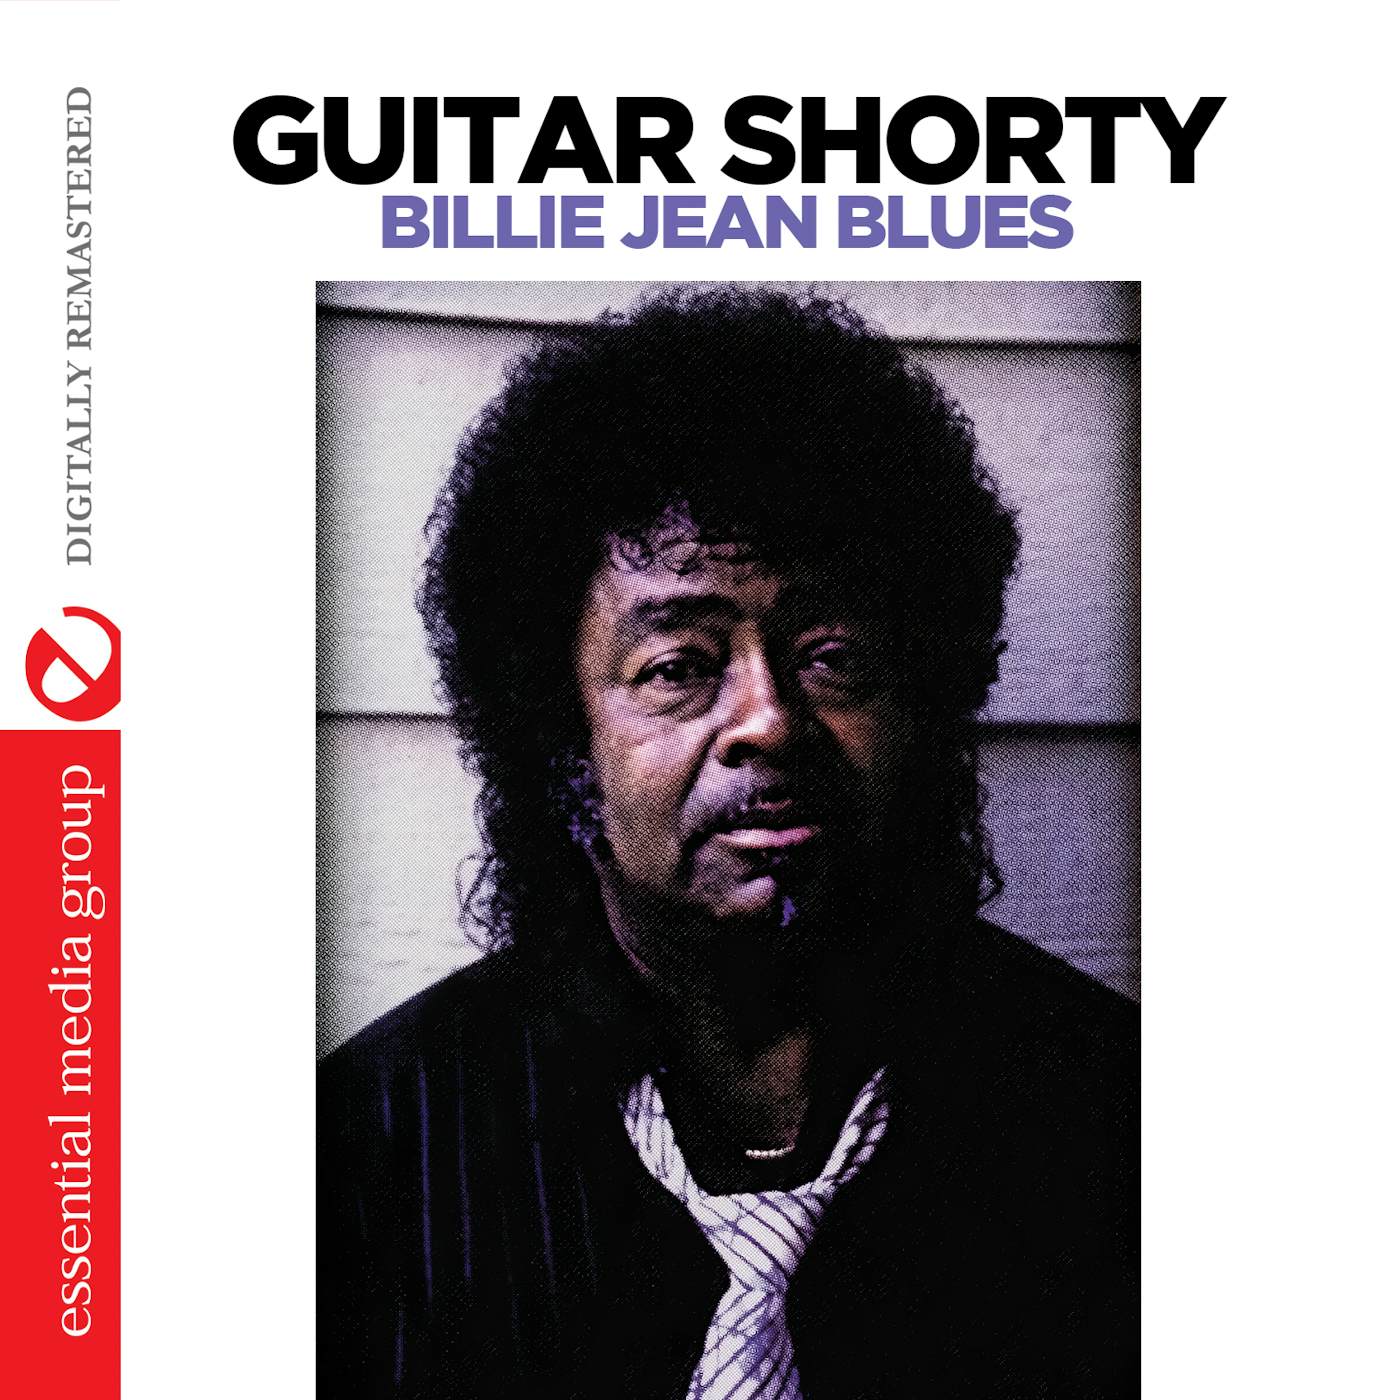 Guitar Shorty BILLIE JEAN BLUES CD